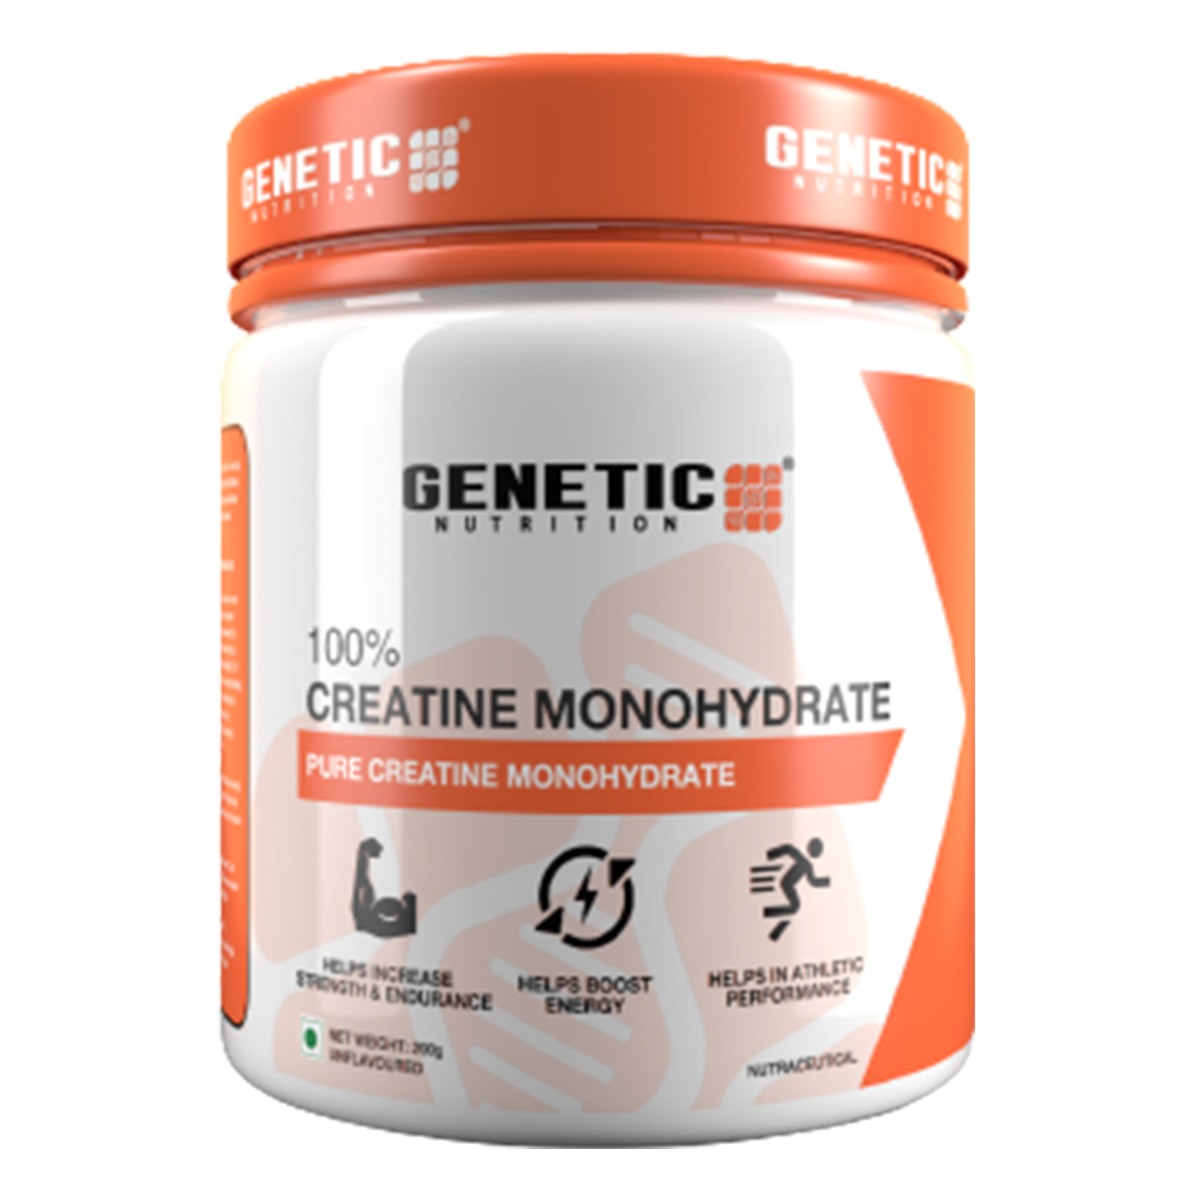 Genetic Nutrition Creatine Monohydrate, 200gm